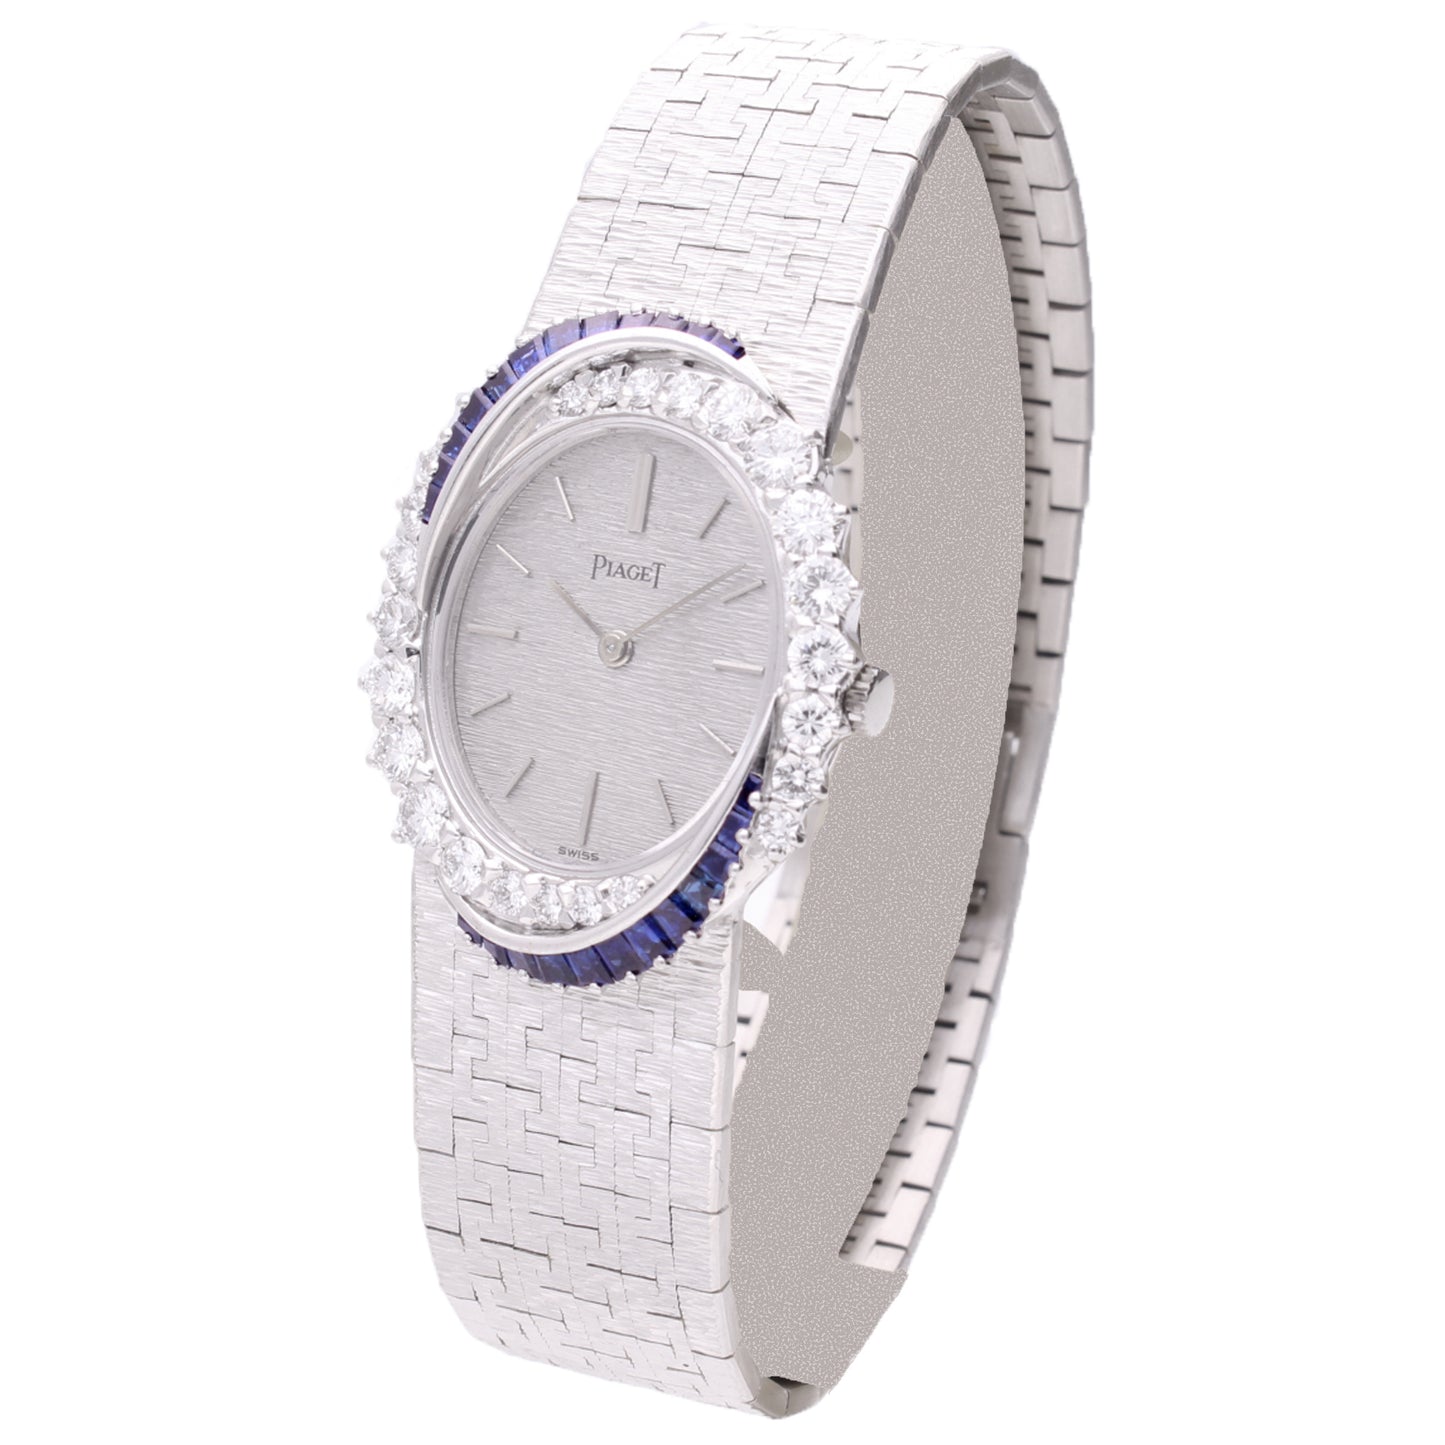 18ct white gold Piaget, diamond and sapphire set bezel bracelet watch. Made 1970